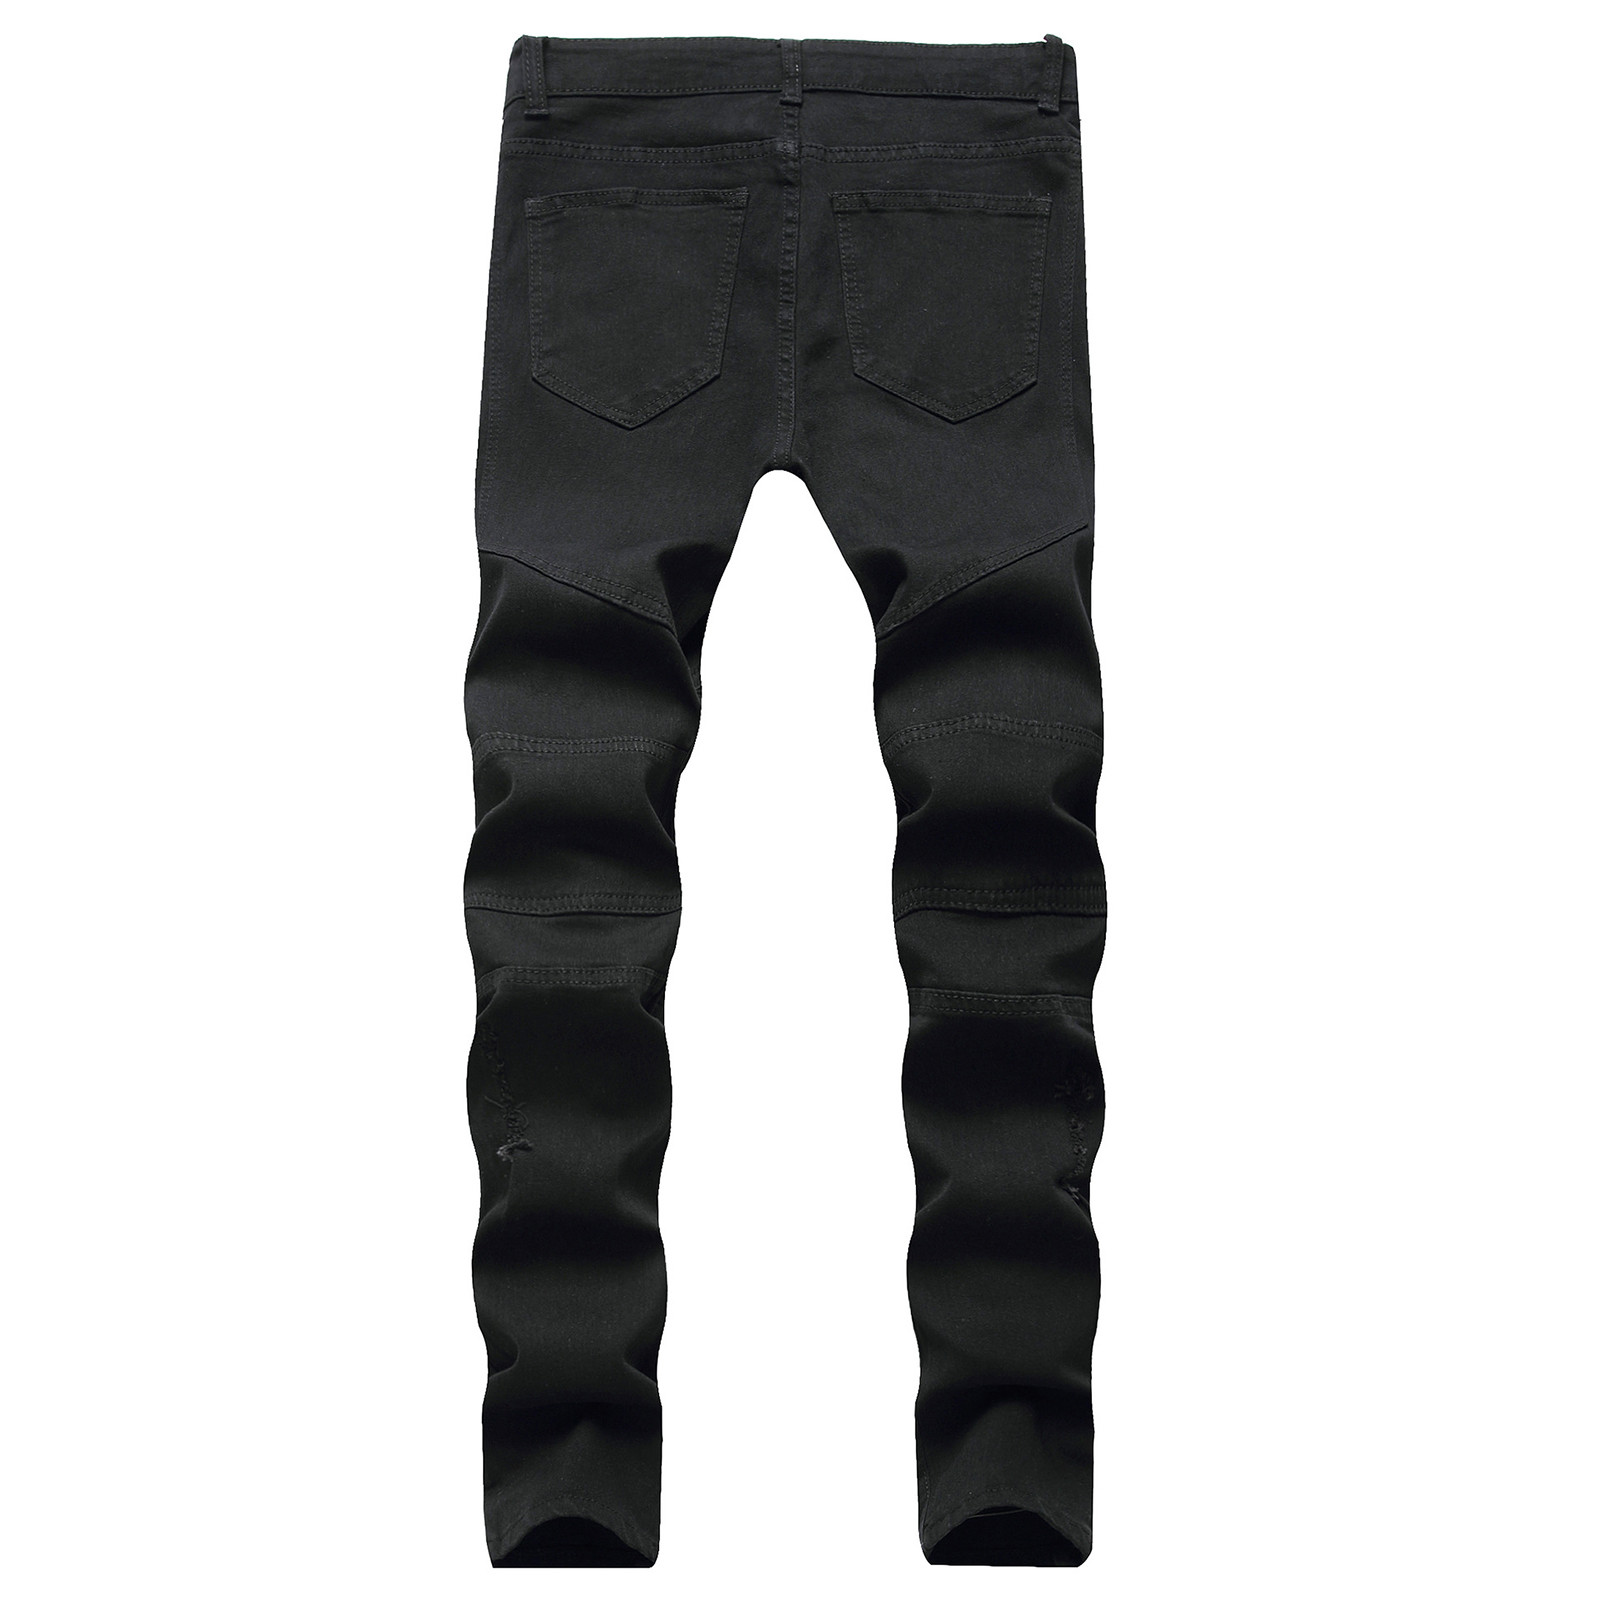 Jeans for Men's Plus Size Capri Trouser Hip-hop Ripped Motorcycle Denim Pant Slim Stretch Leg Pencil Pants - image 3 of 3